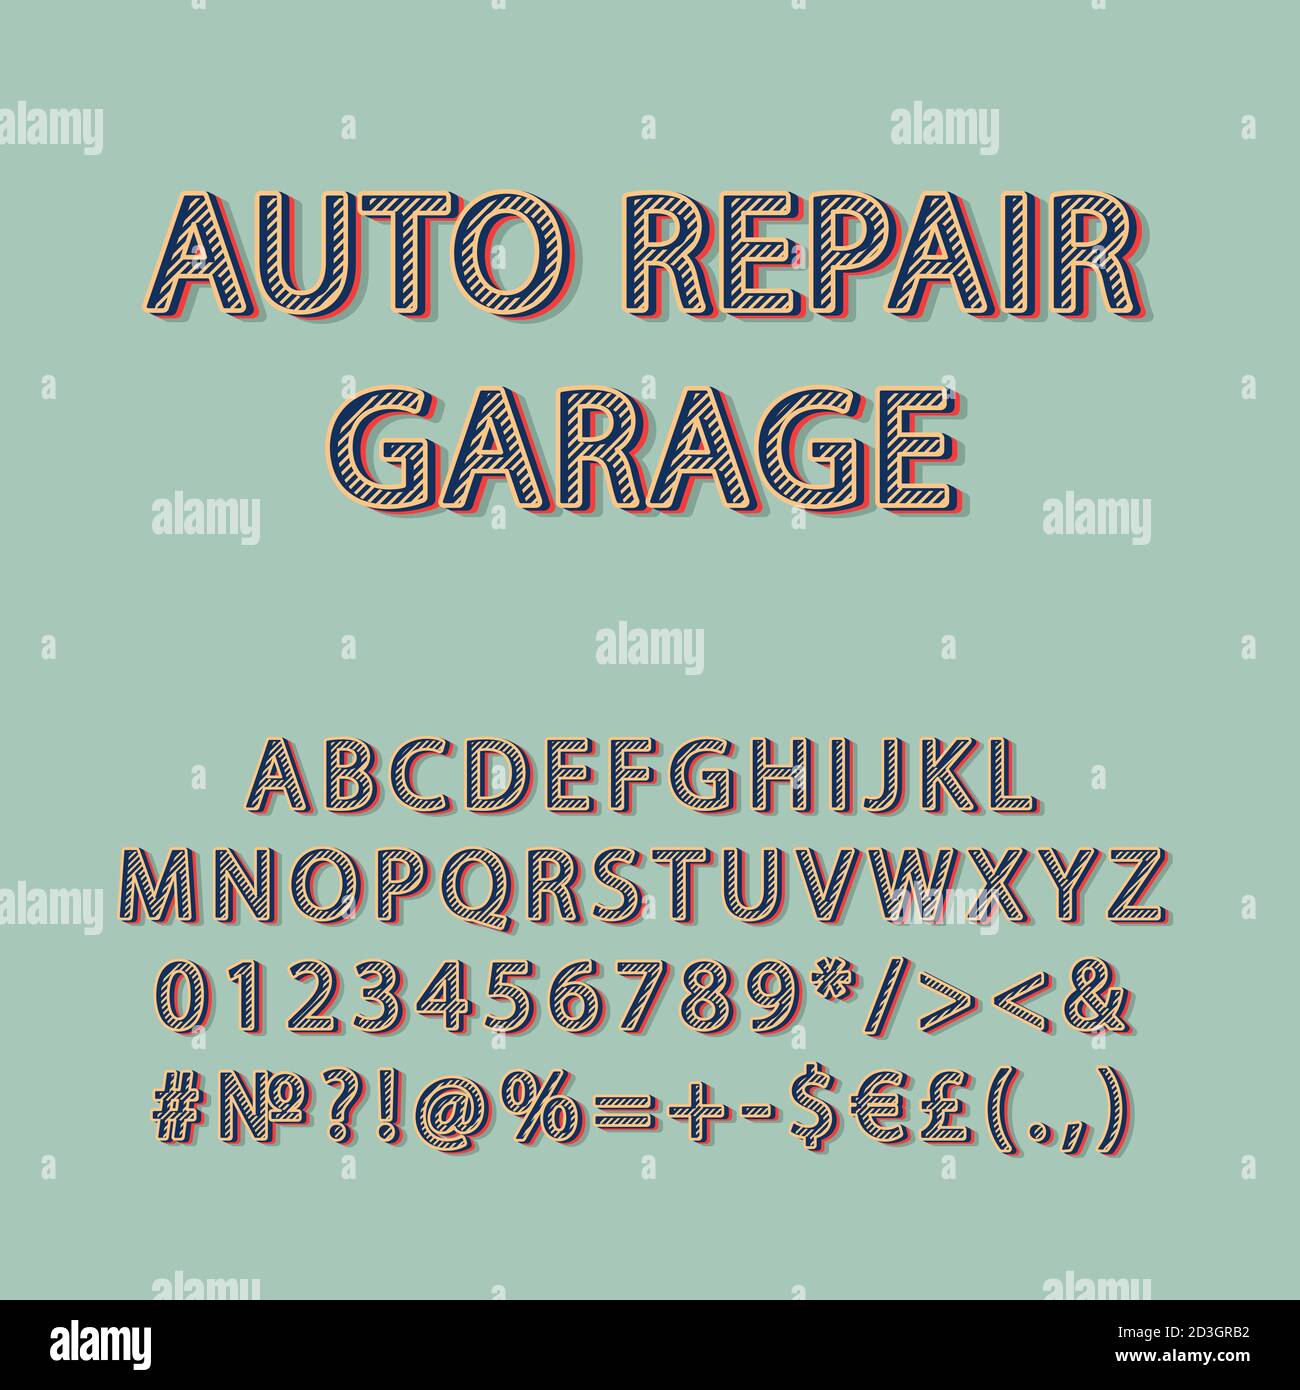 Auto repair garage vintage 3d vector alphabet set Stock Vector